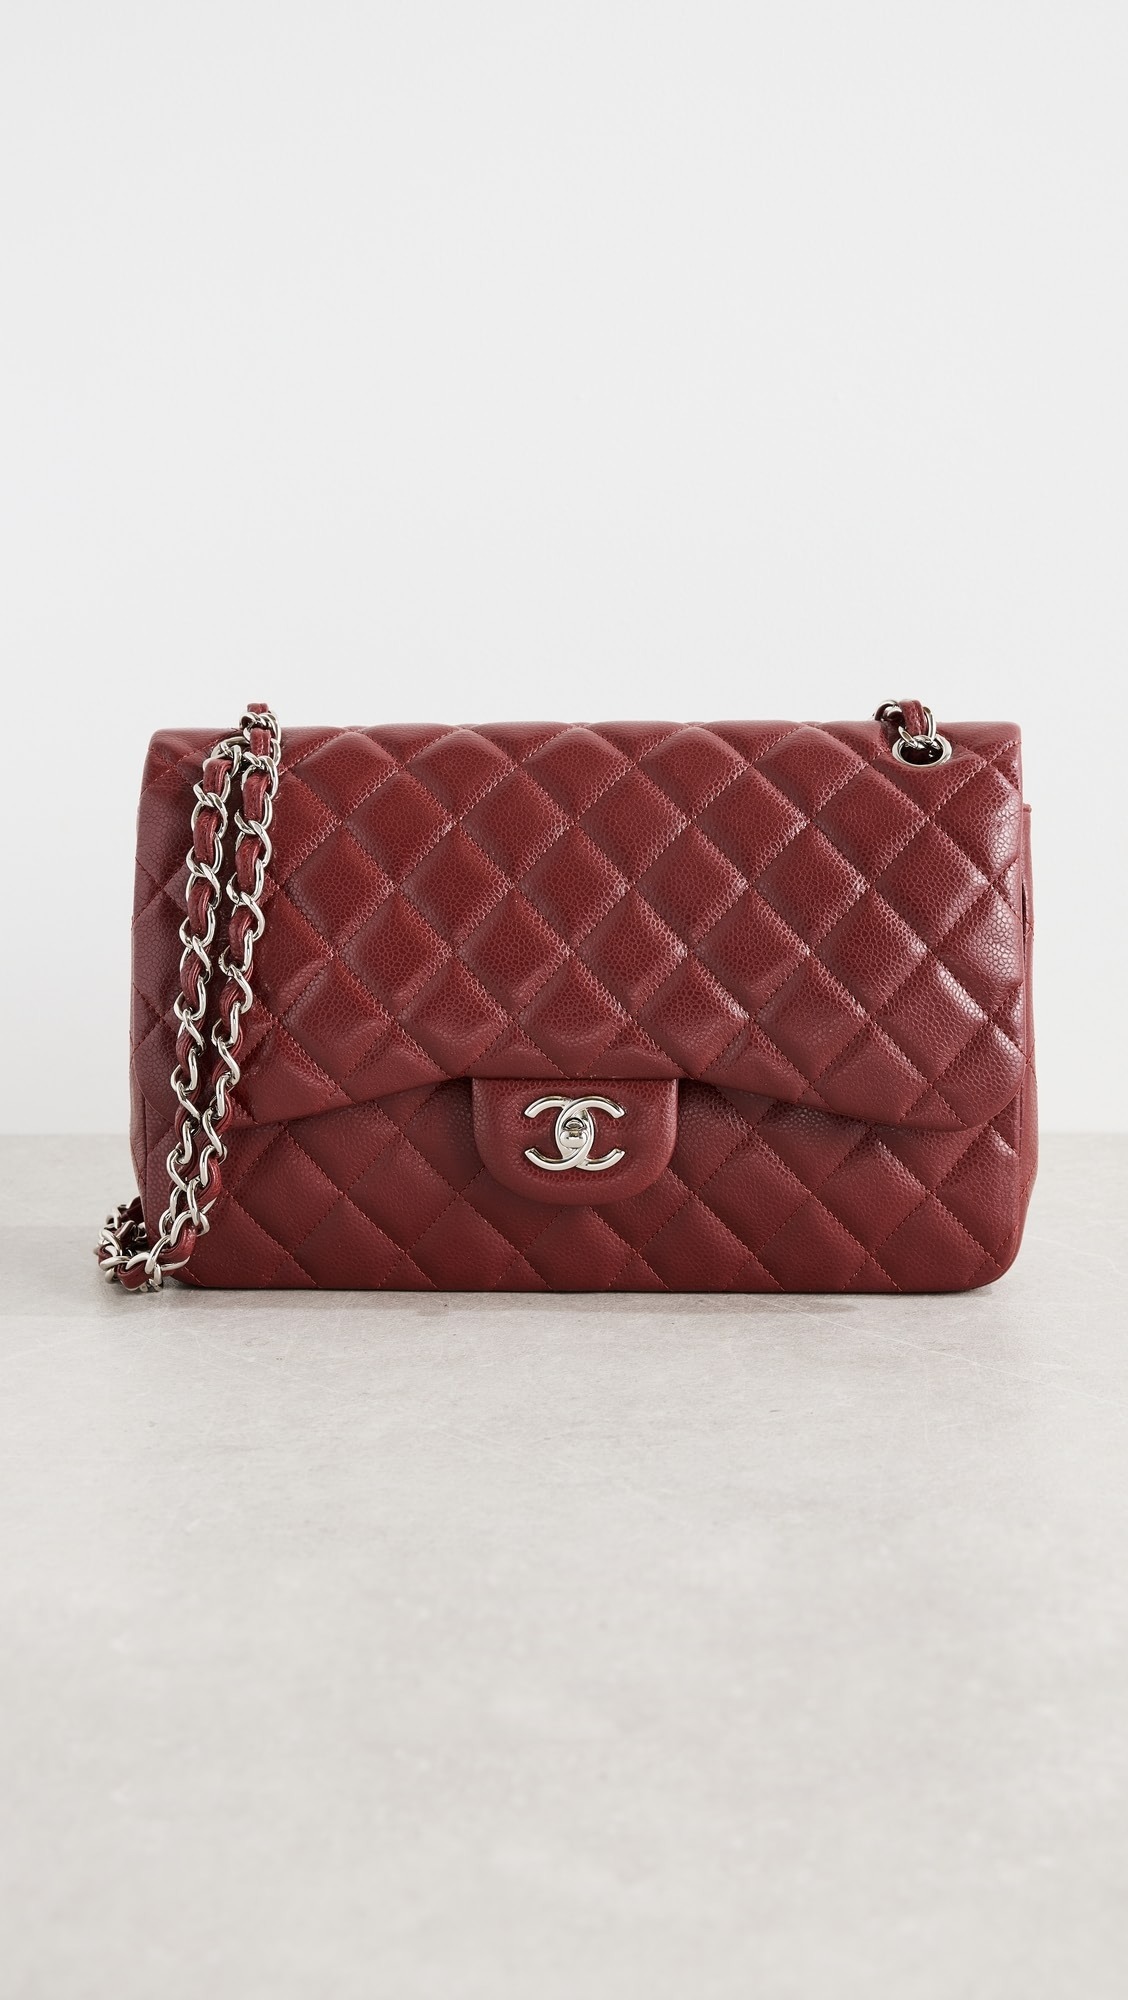 Chanel Burgundy Flap Bag